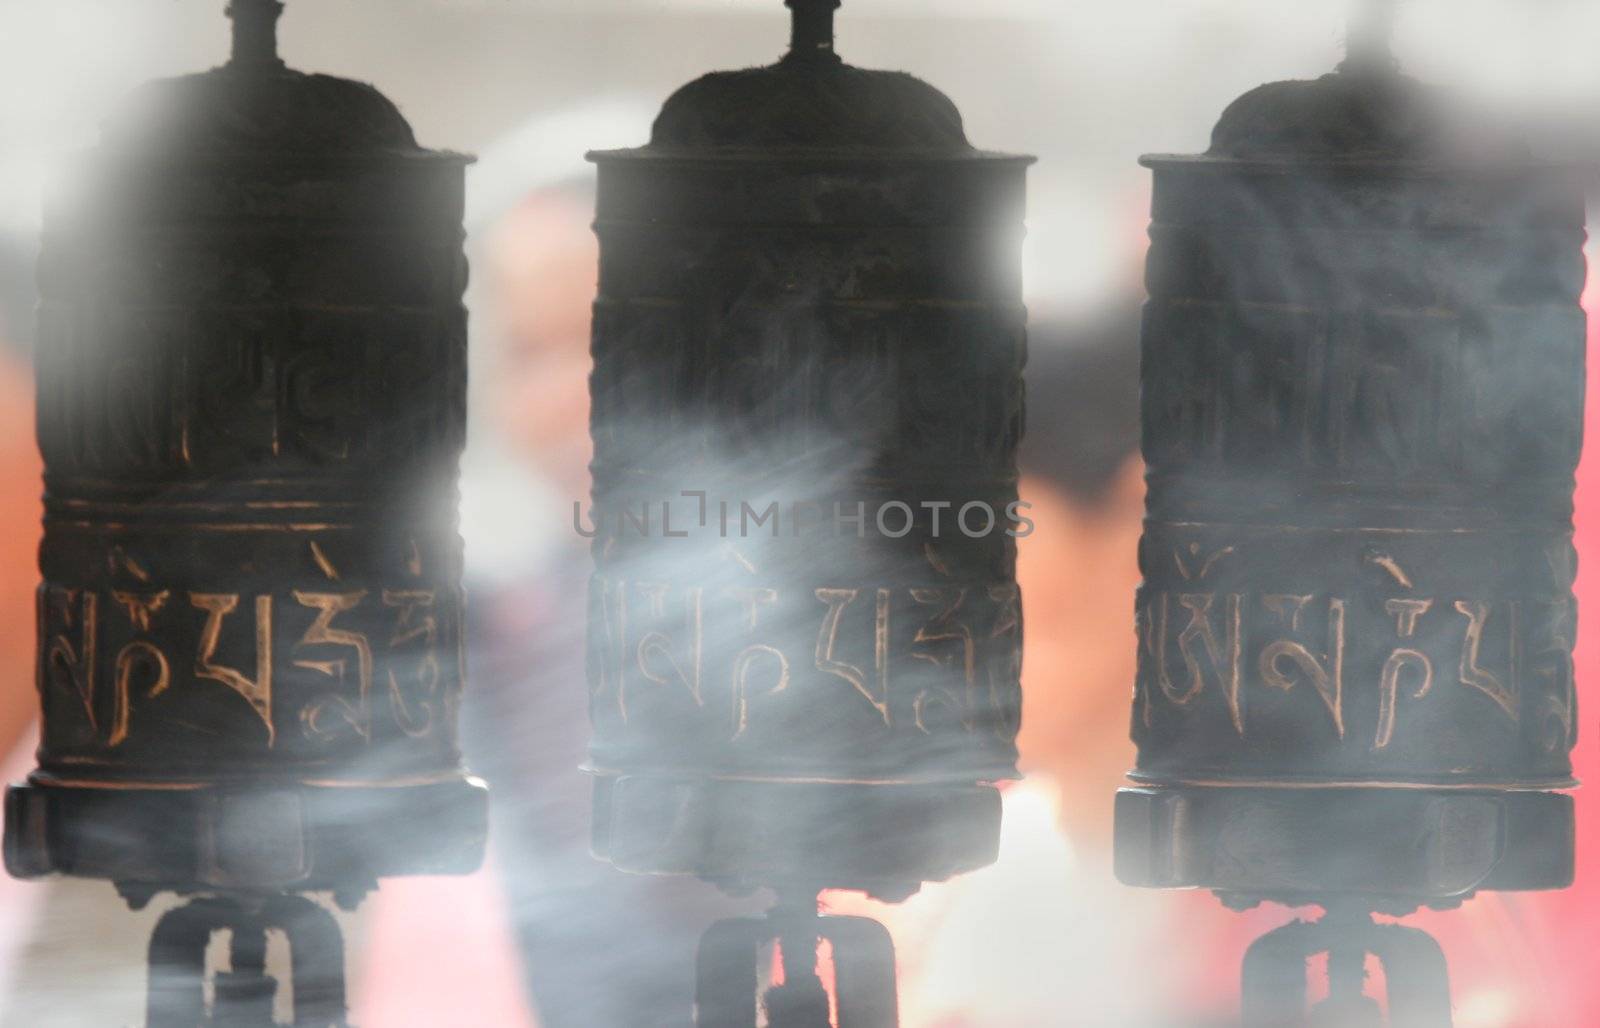 Tibetan Buddhist prayer wheels, smoke in the background